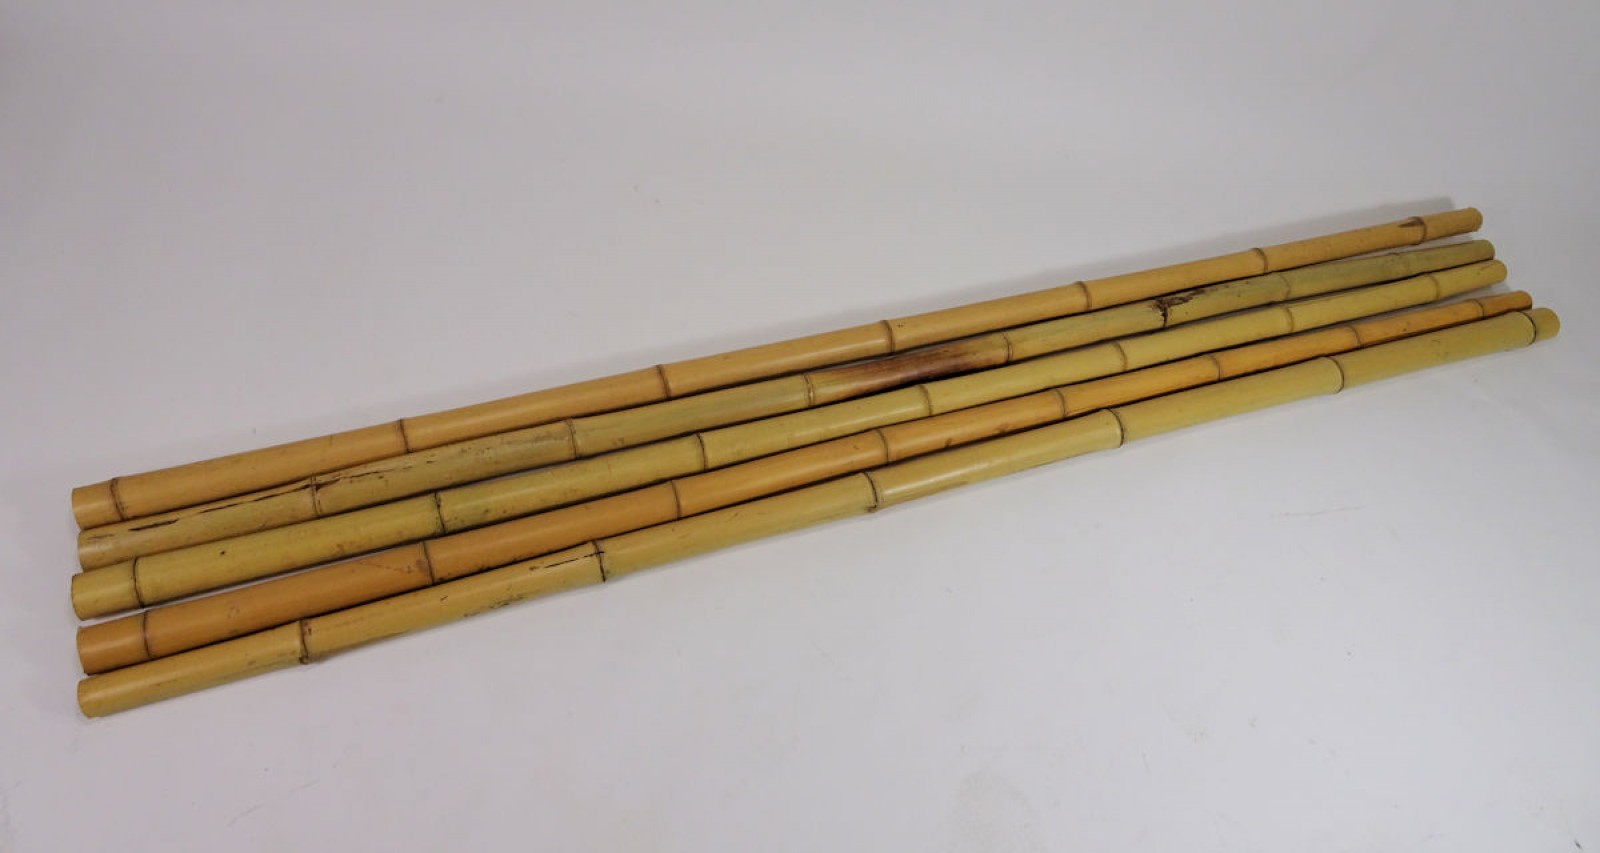 5 x Bambusrohr, Bambusstange, Bambusstangen L 200 cm D 5-6 cm